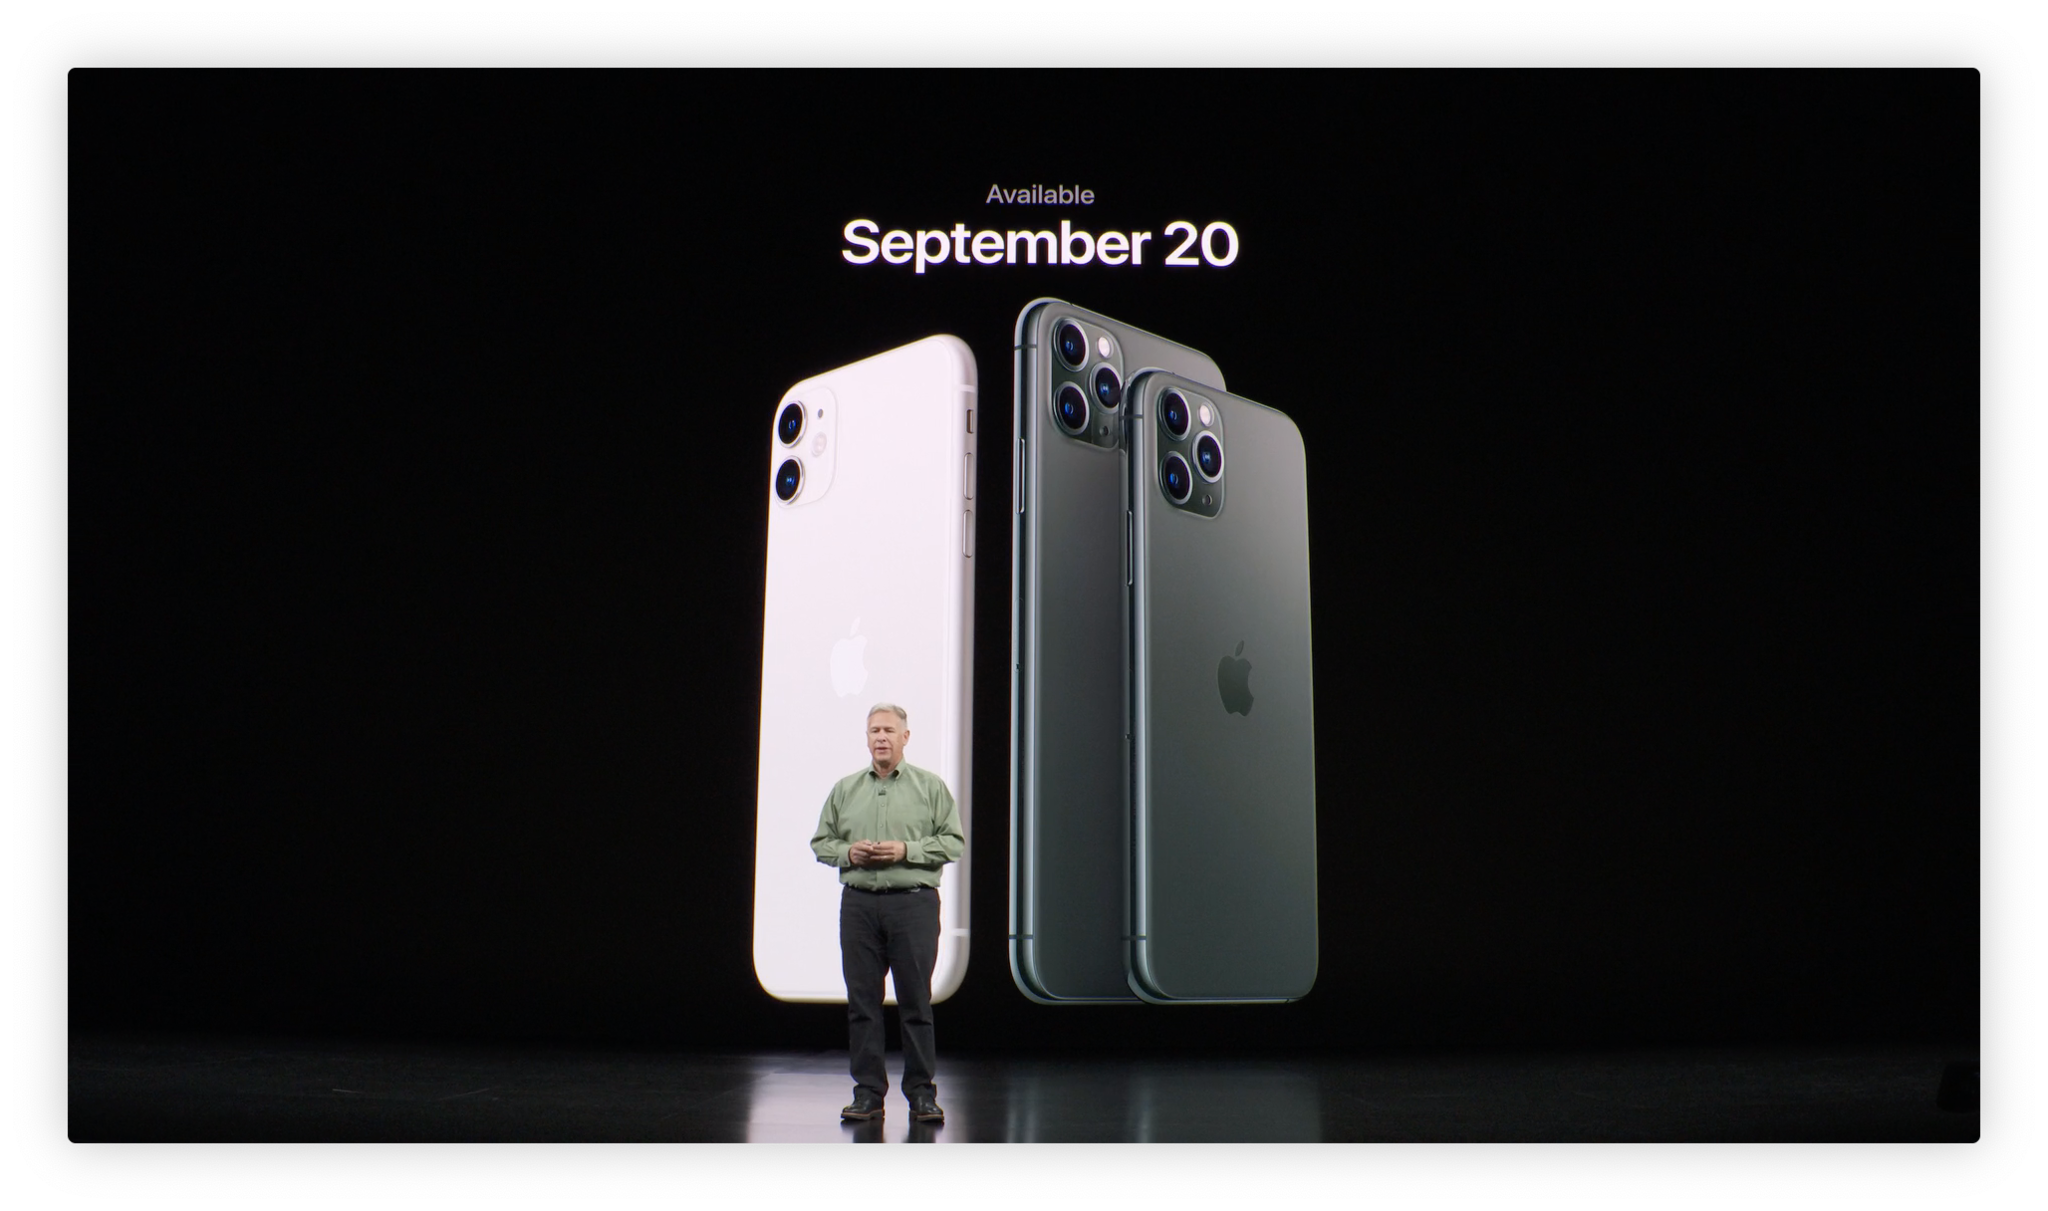 iPhone 11 release date